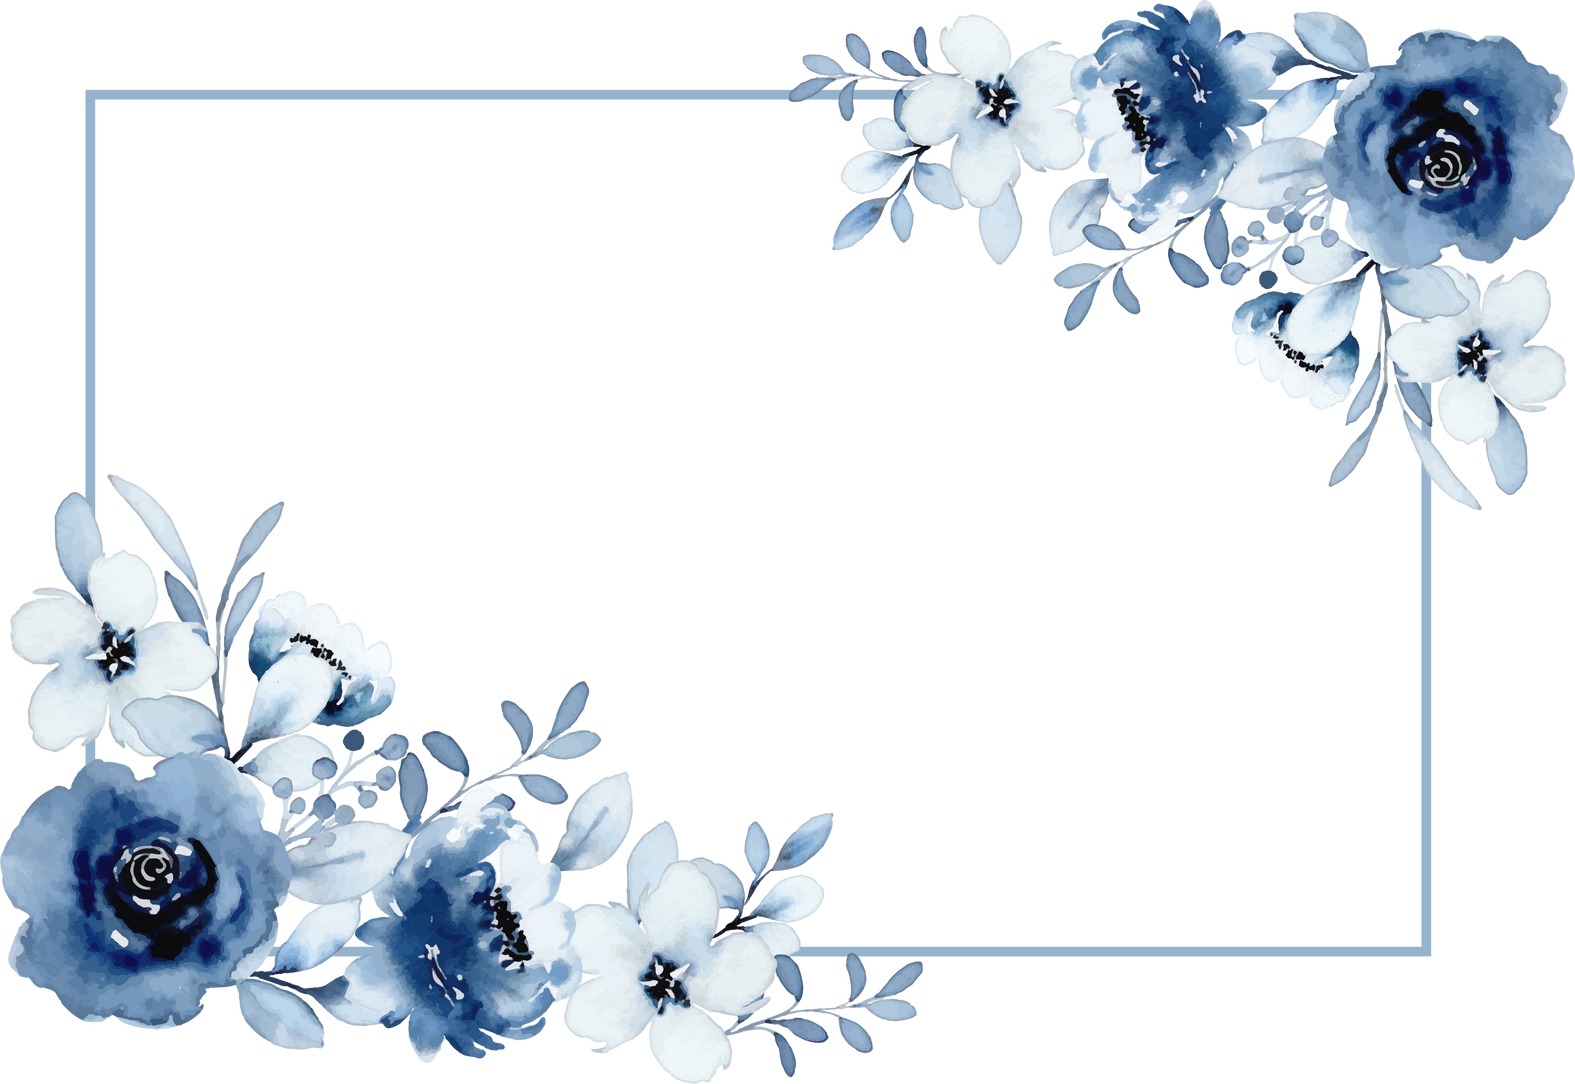 Blue floral watercolor frame